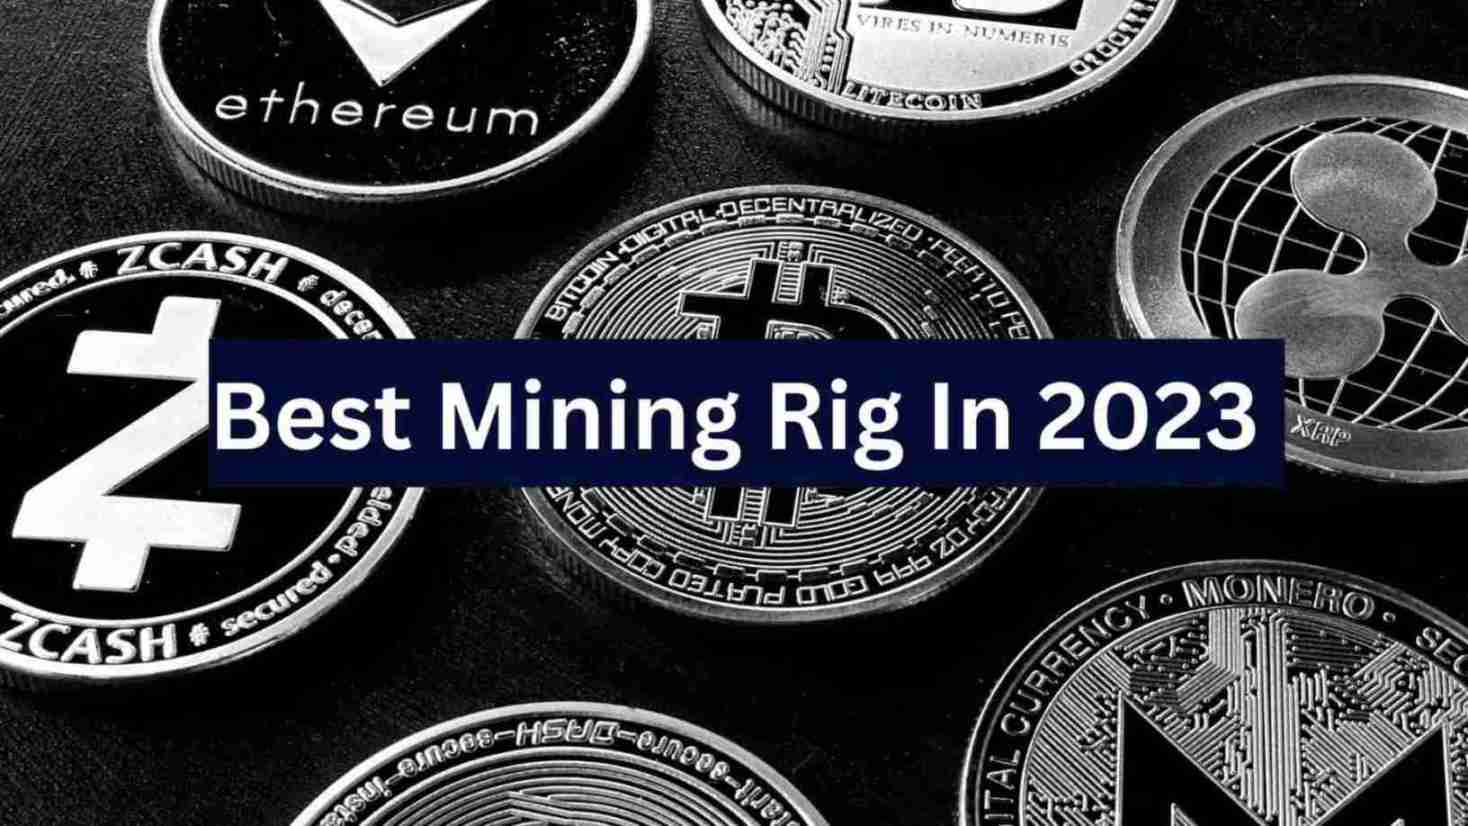 Best Mining Rig In 2023